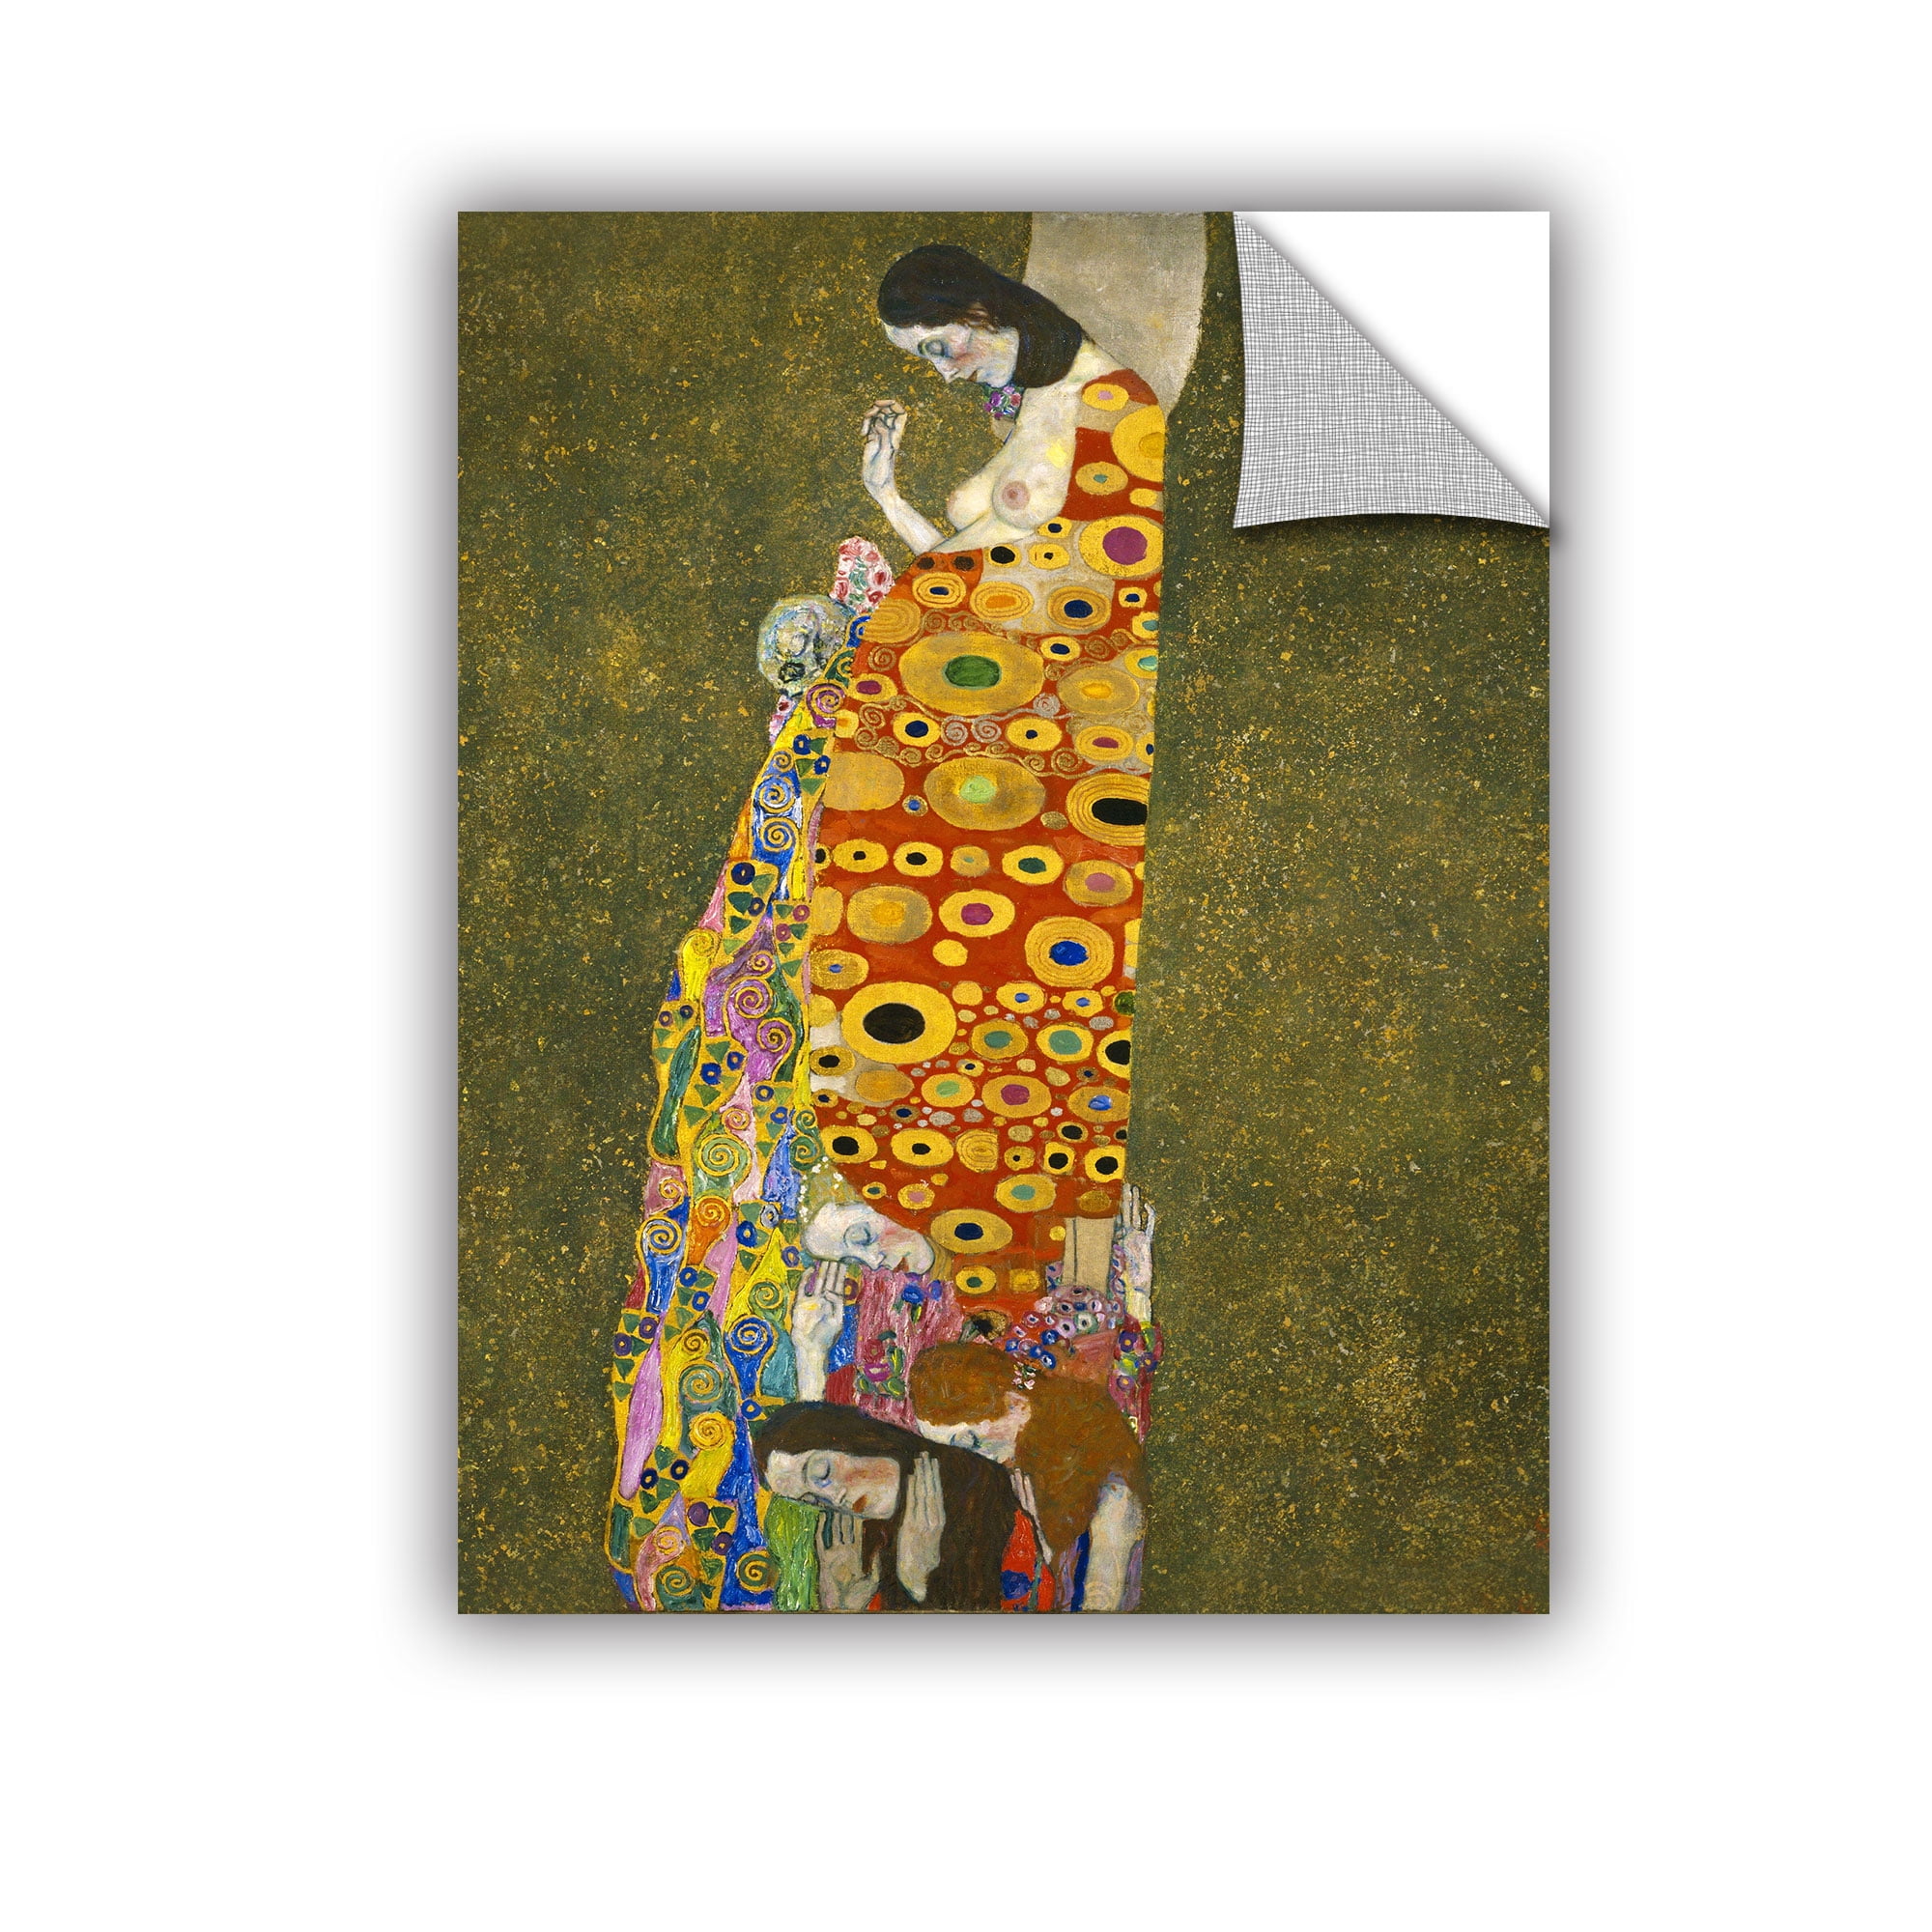 12 by 24 ArtWall Gustav Klimts Anticipation Appeelz Removable Graphic Wall Art